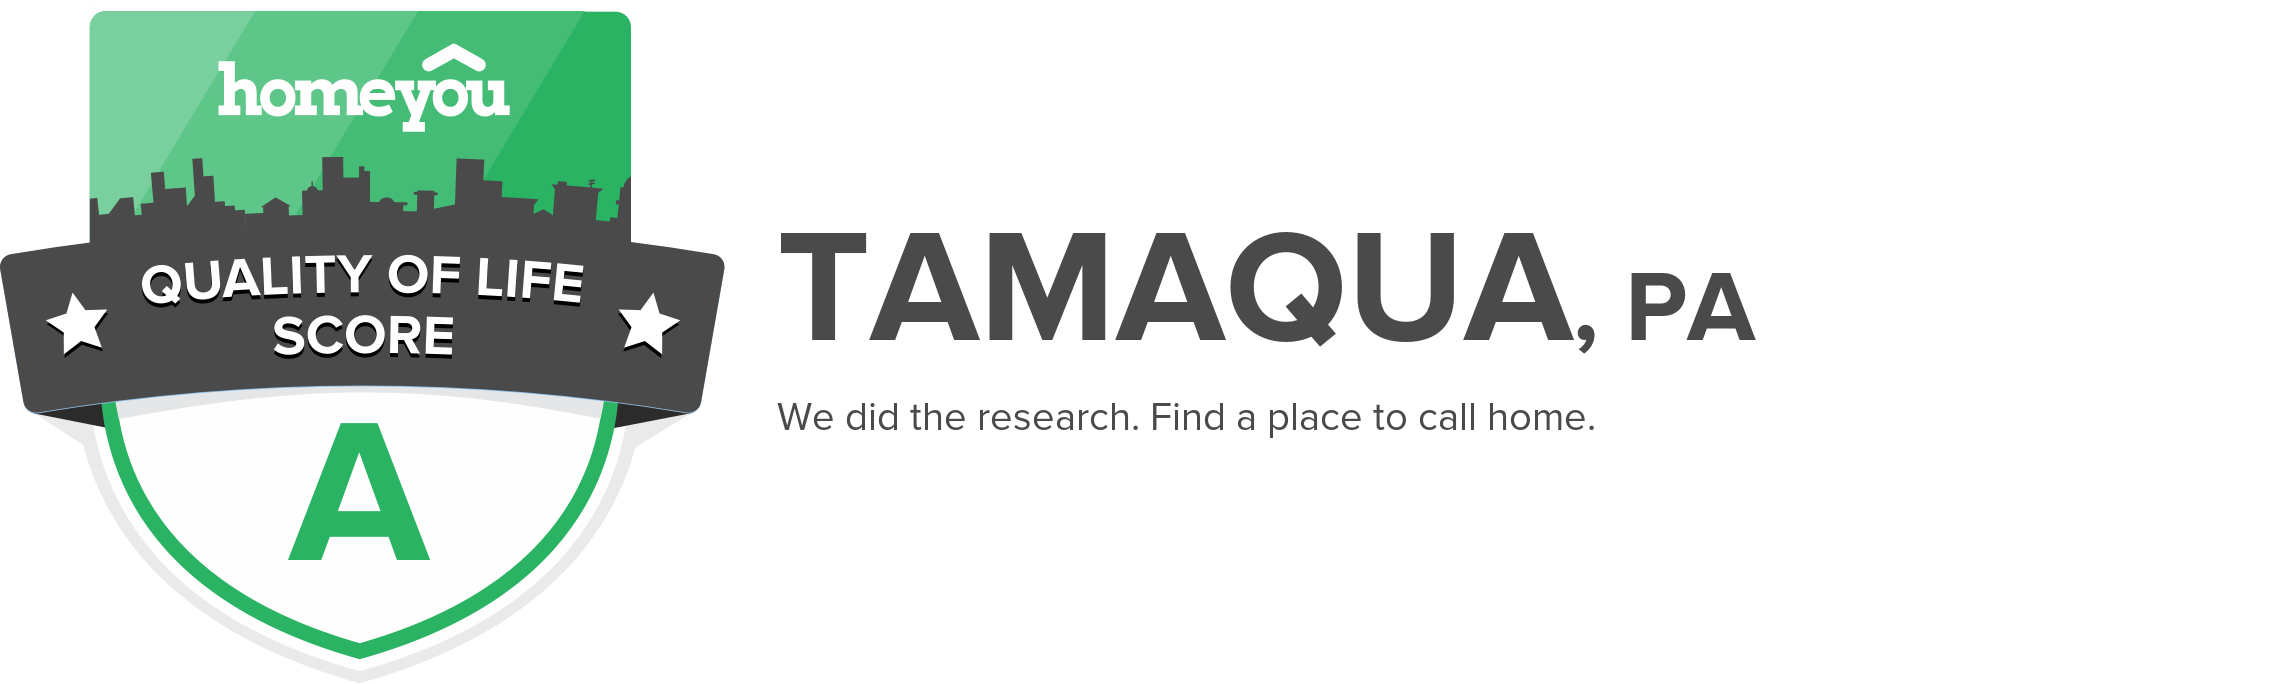 Tamaqua, PA